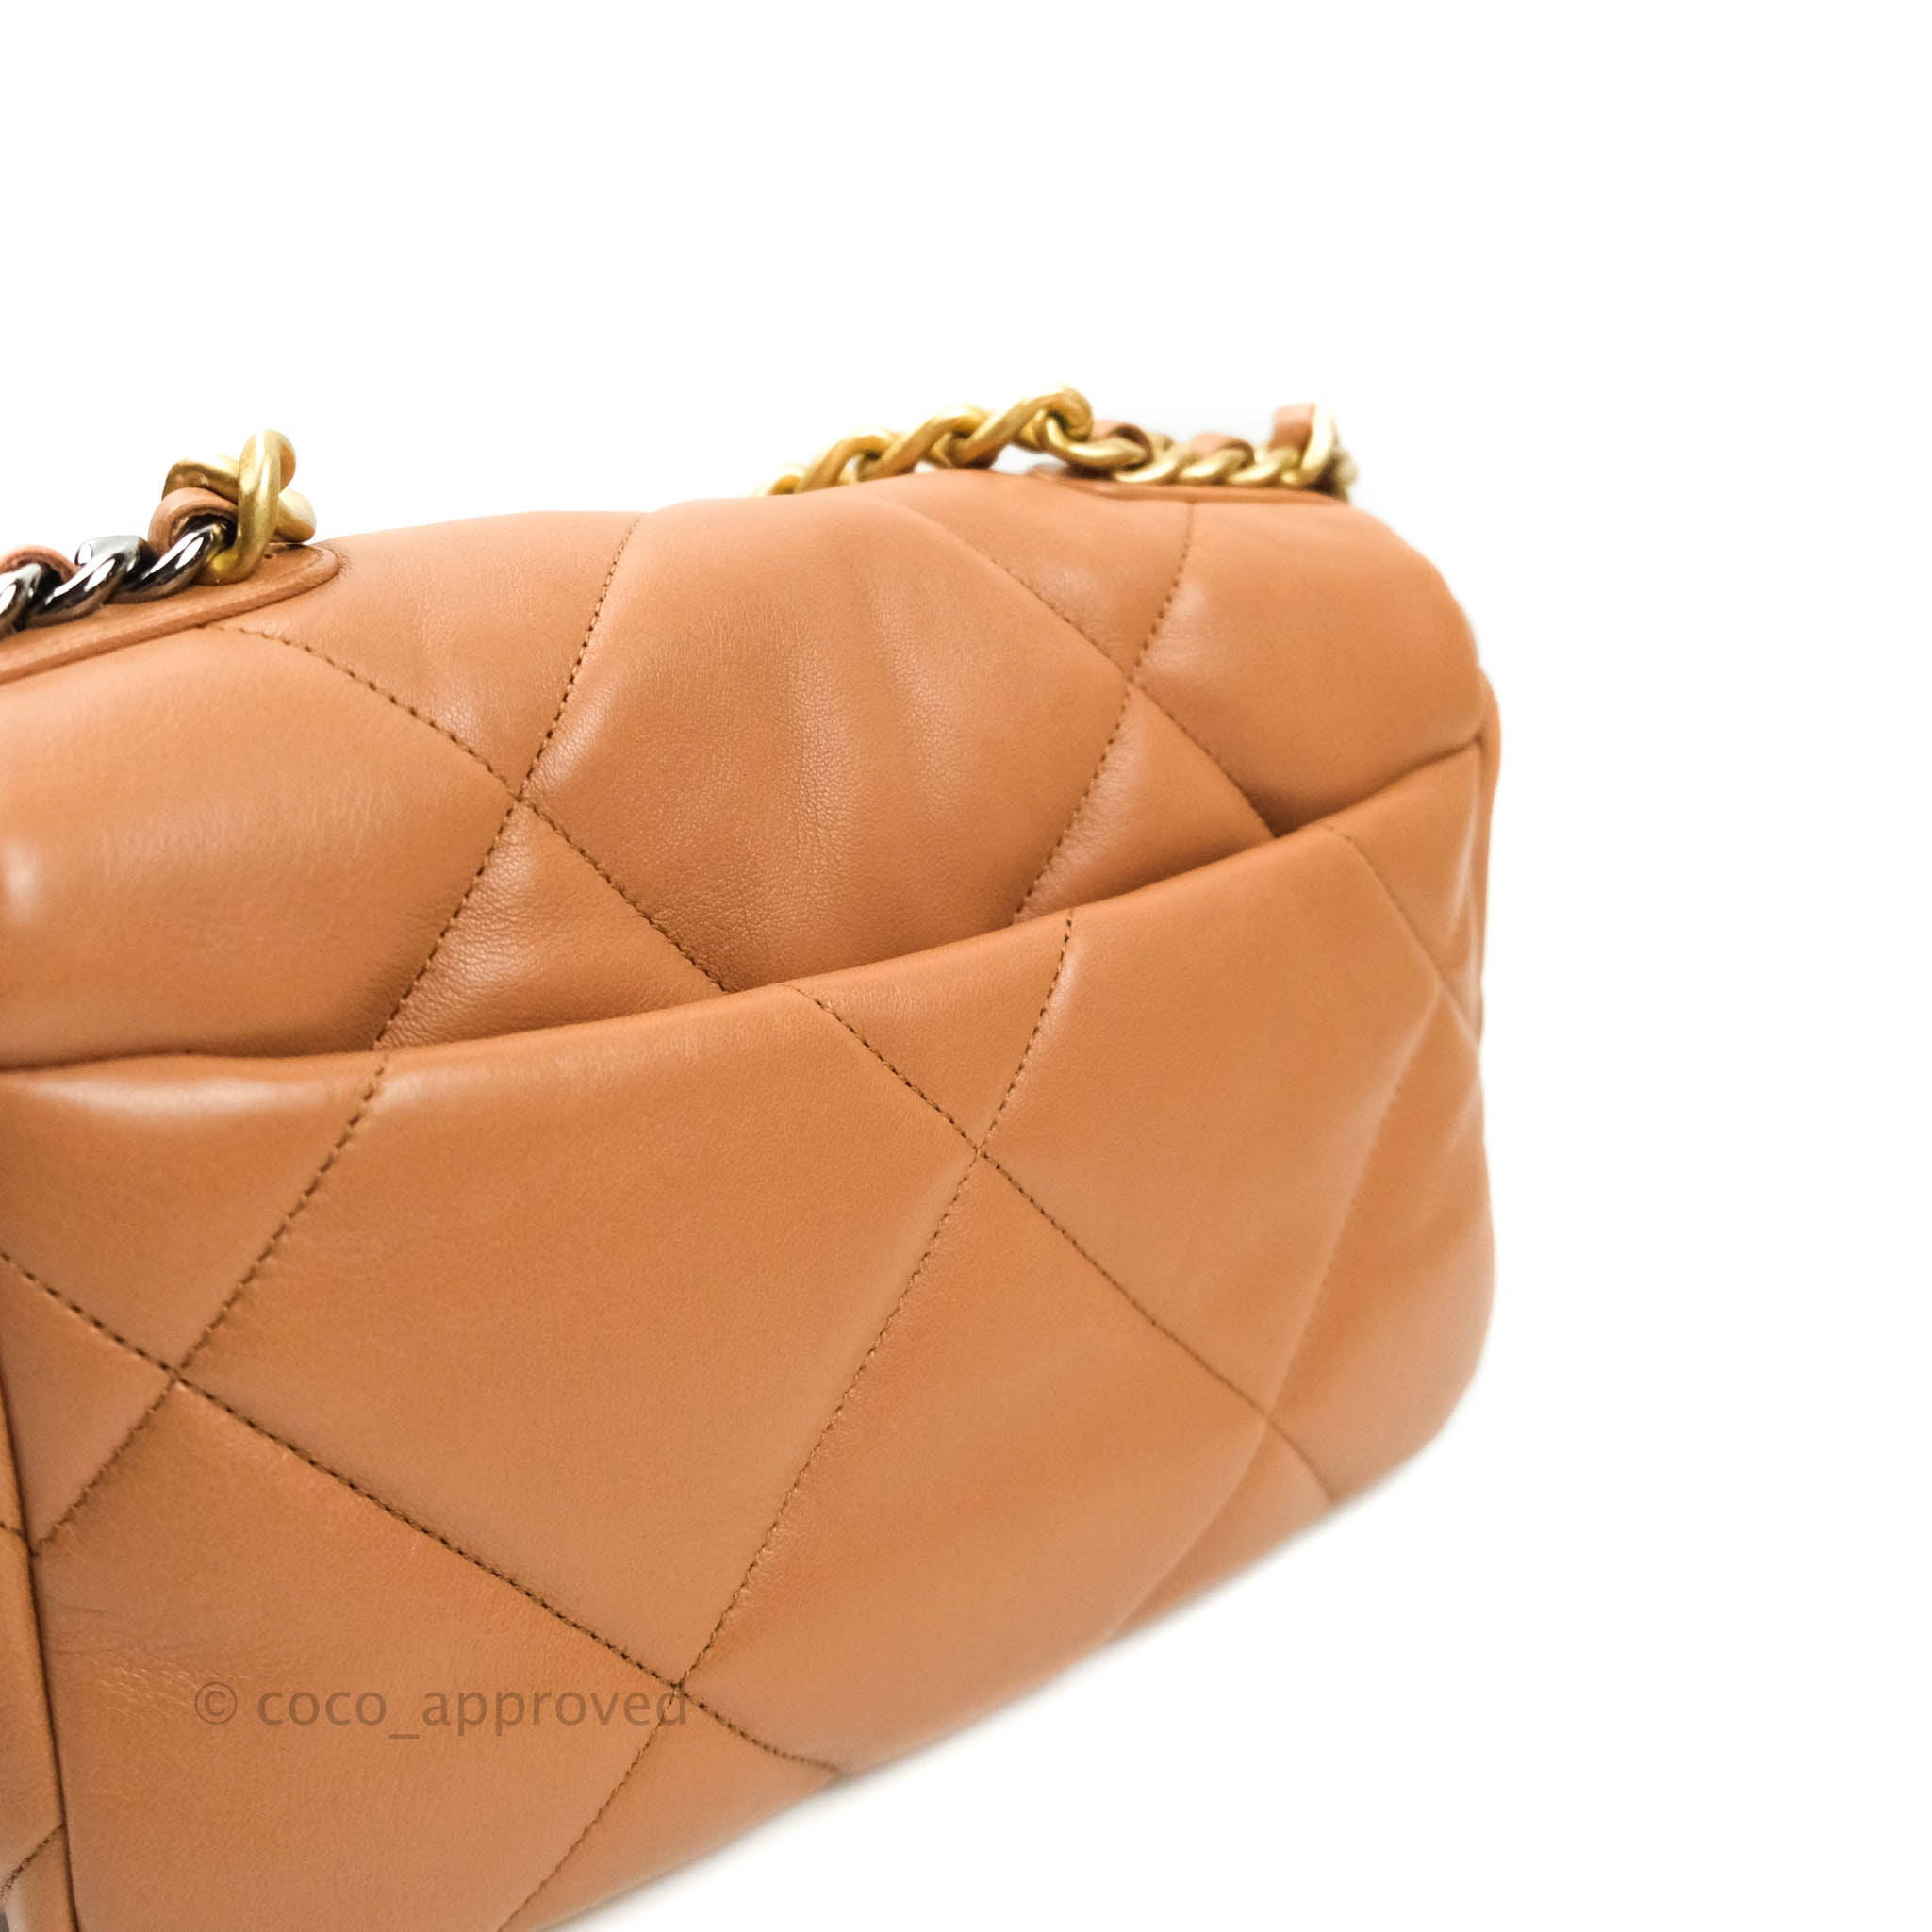 Chanel 19 Flap Bag - Beige Quilted Lambskin Handbag